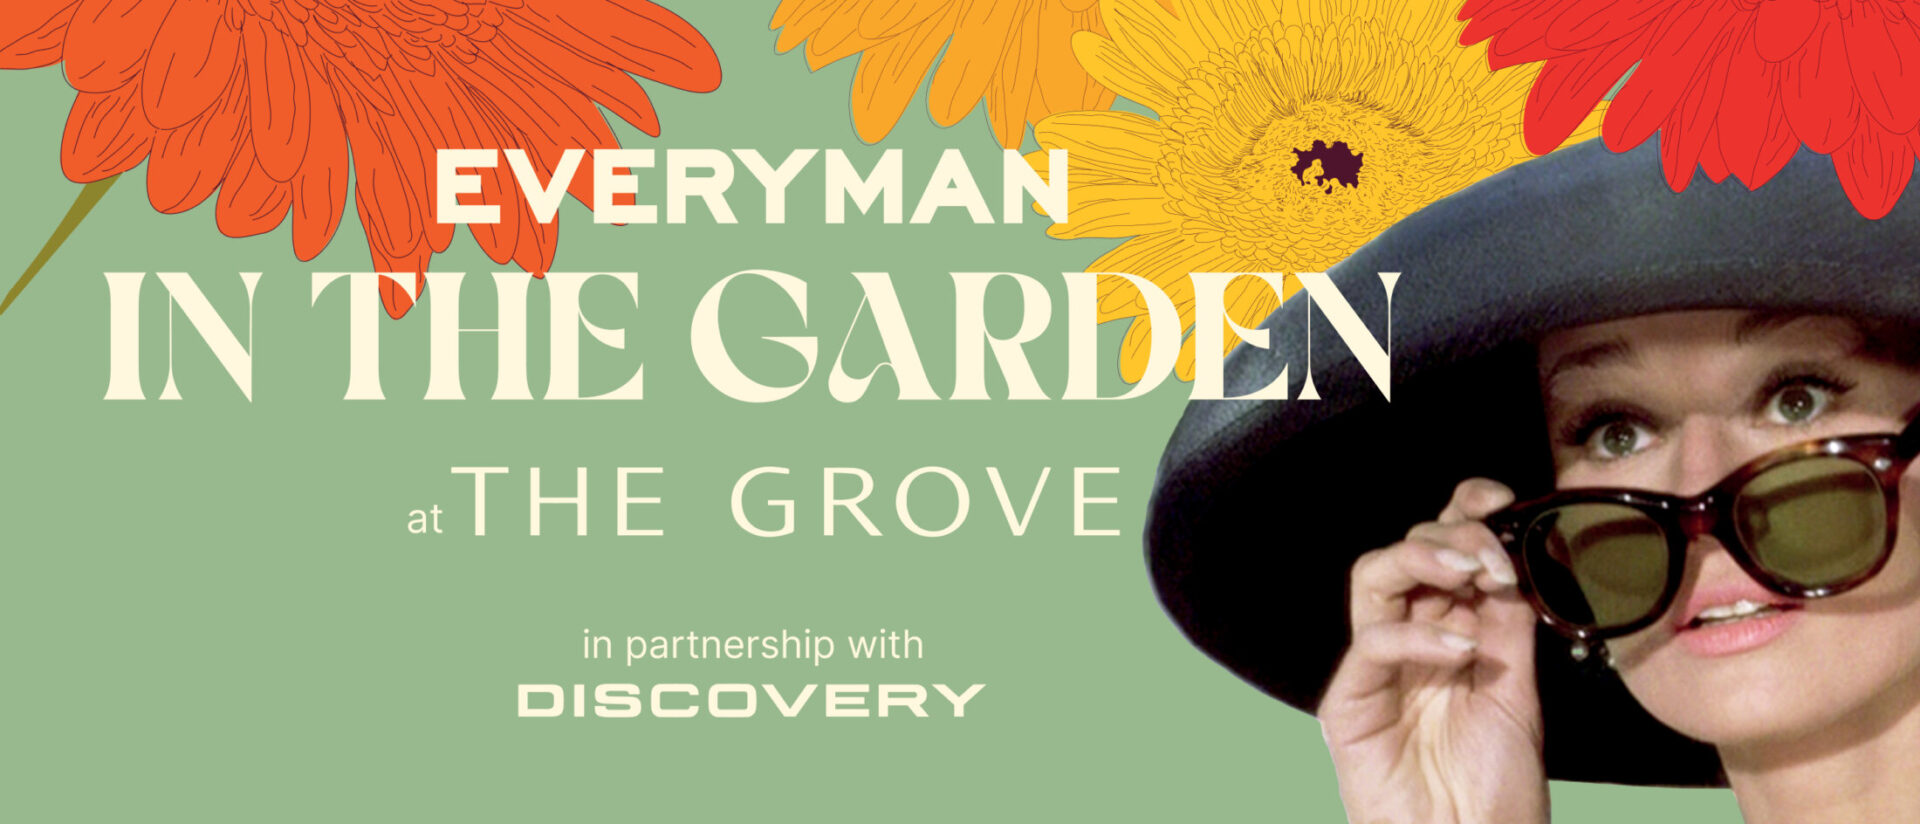 Everyman-in-the-garden